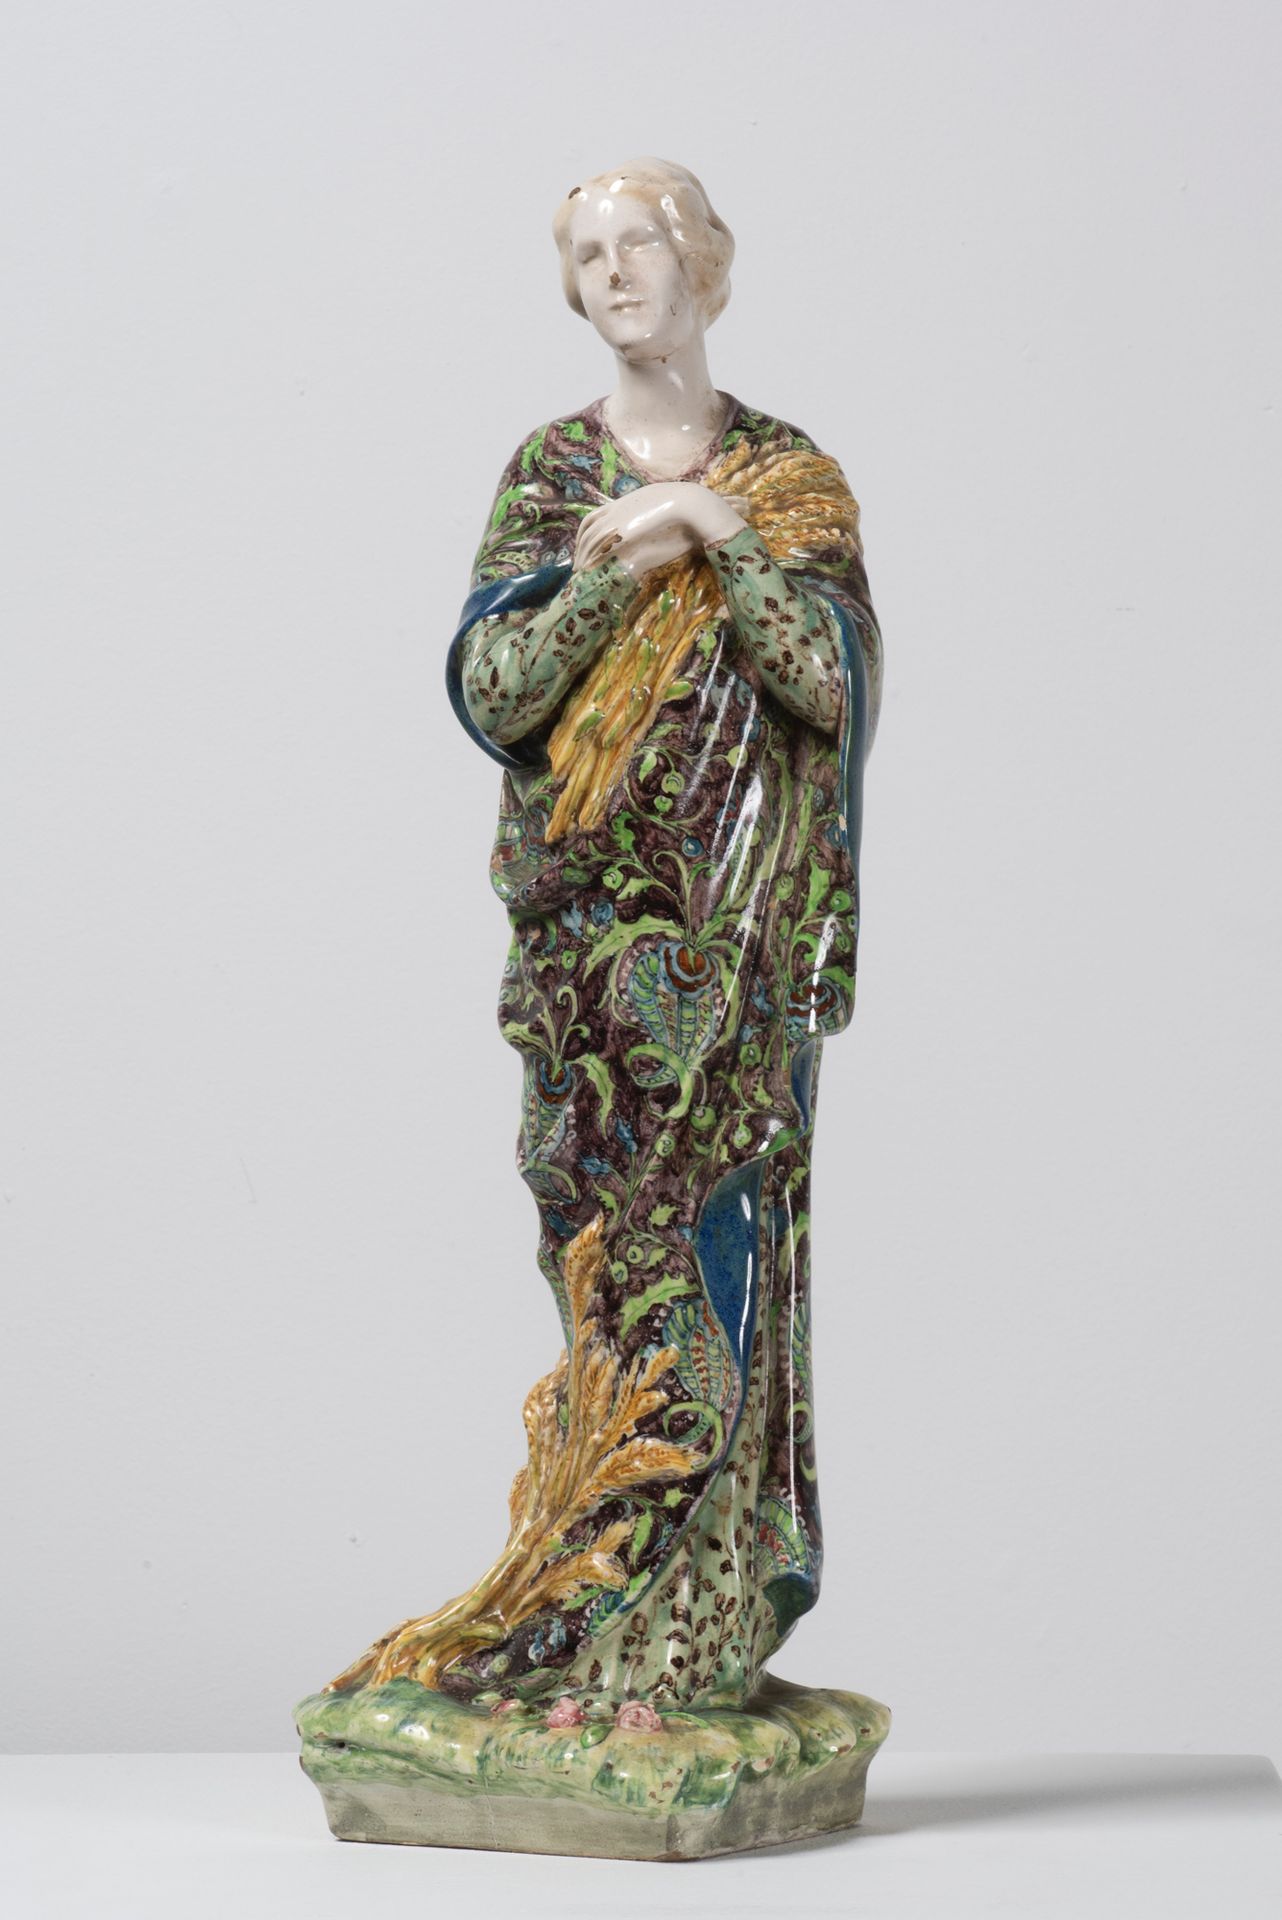 Null MOMOGRAM AM 带着麦穗的女人
釉面陶瓷材质。
帘子上有植物和花卉元素的装饰。
19世纪。
小事故。
高47,5厘米
出处：
原René Wi&hellip;